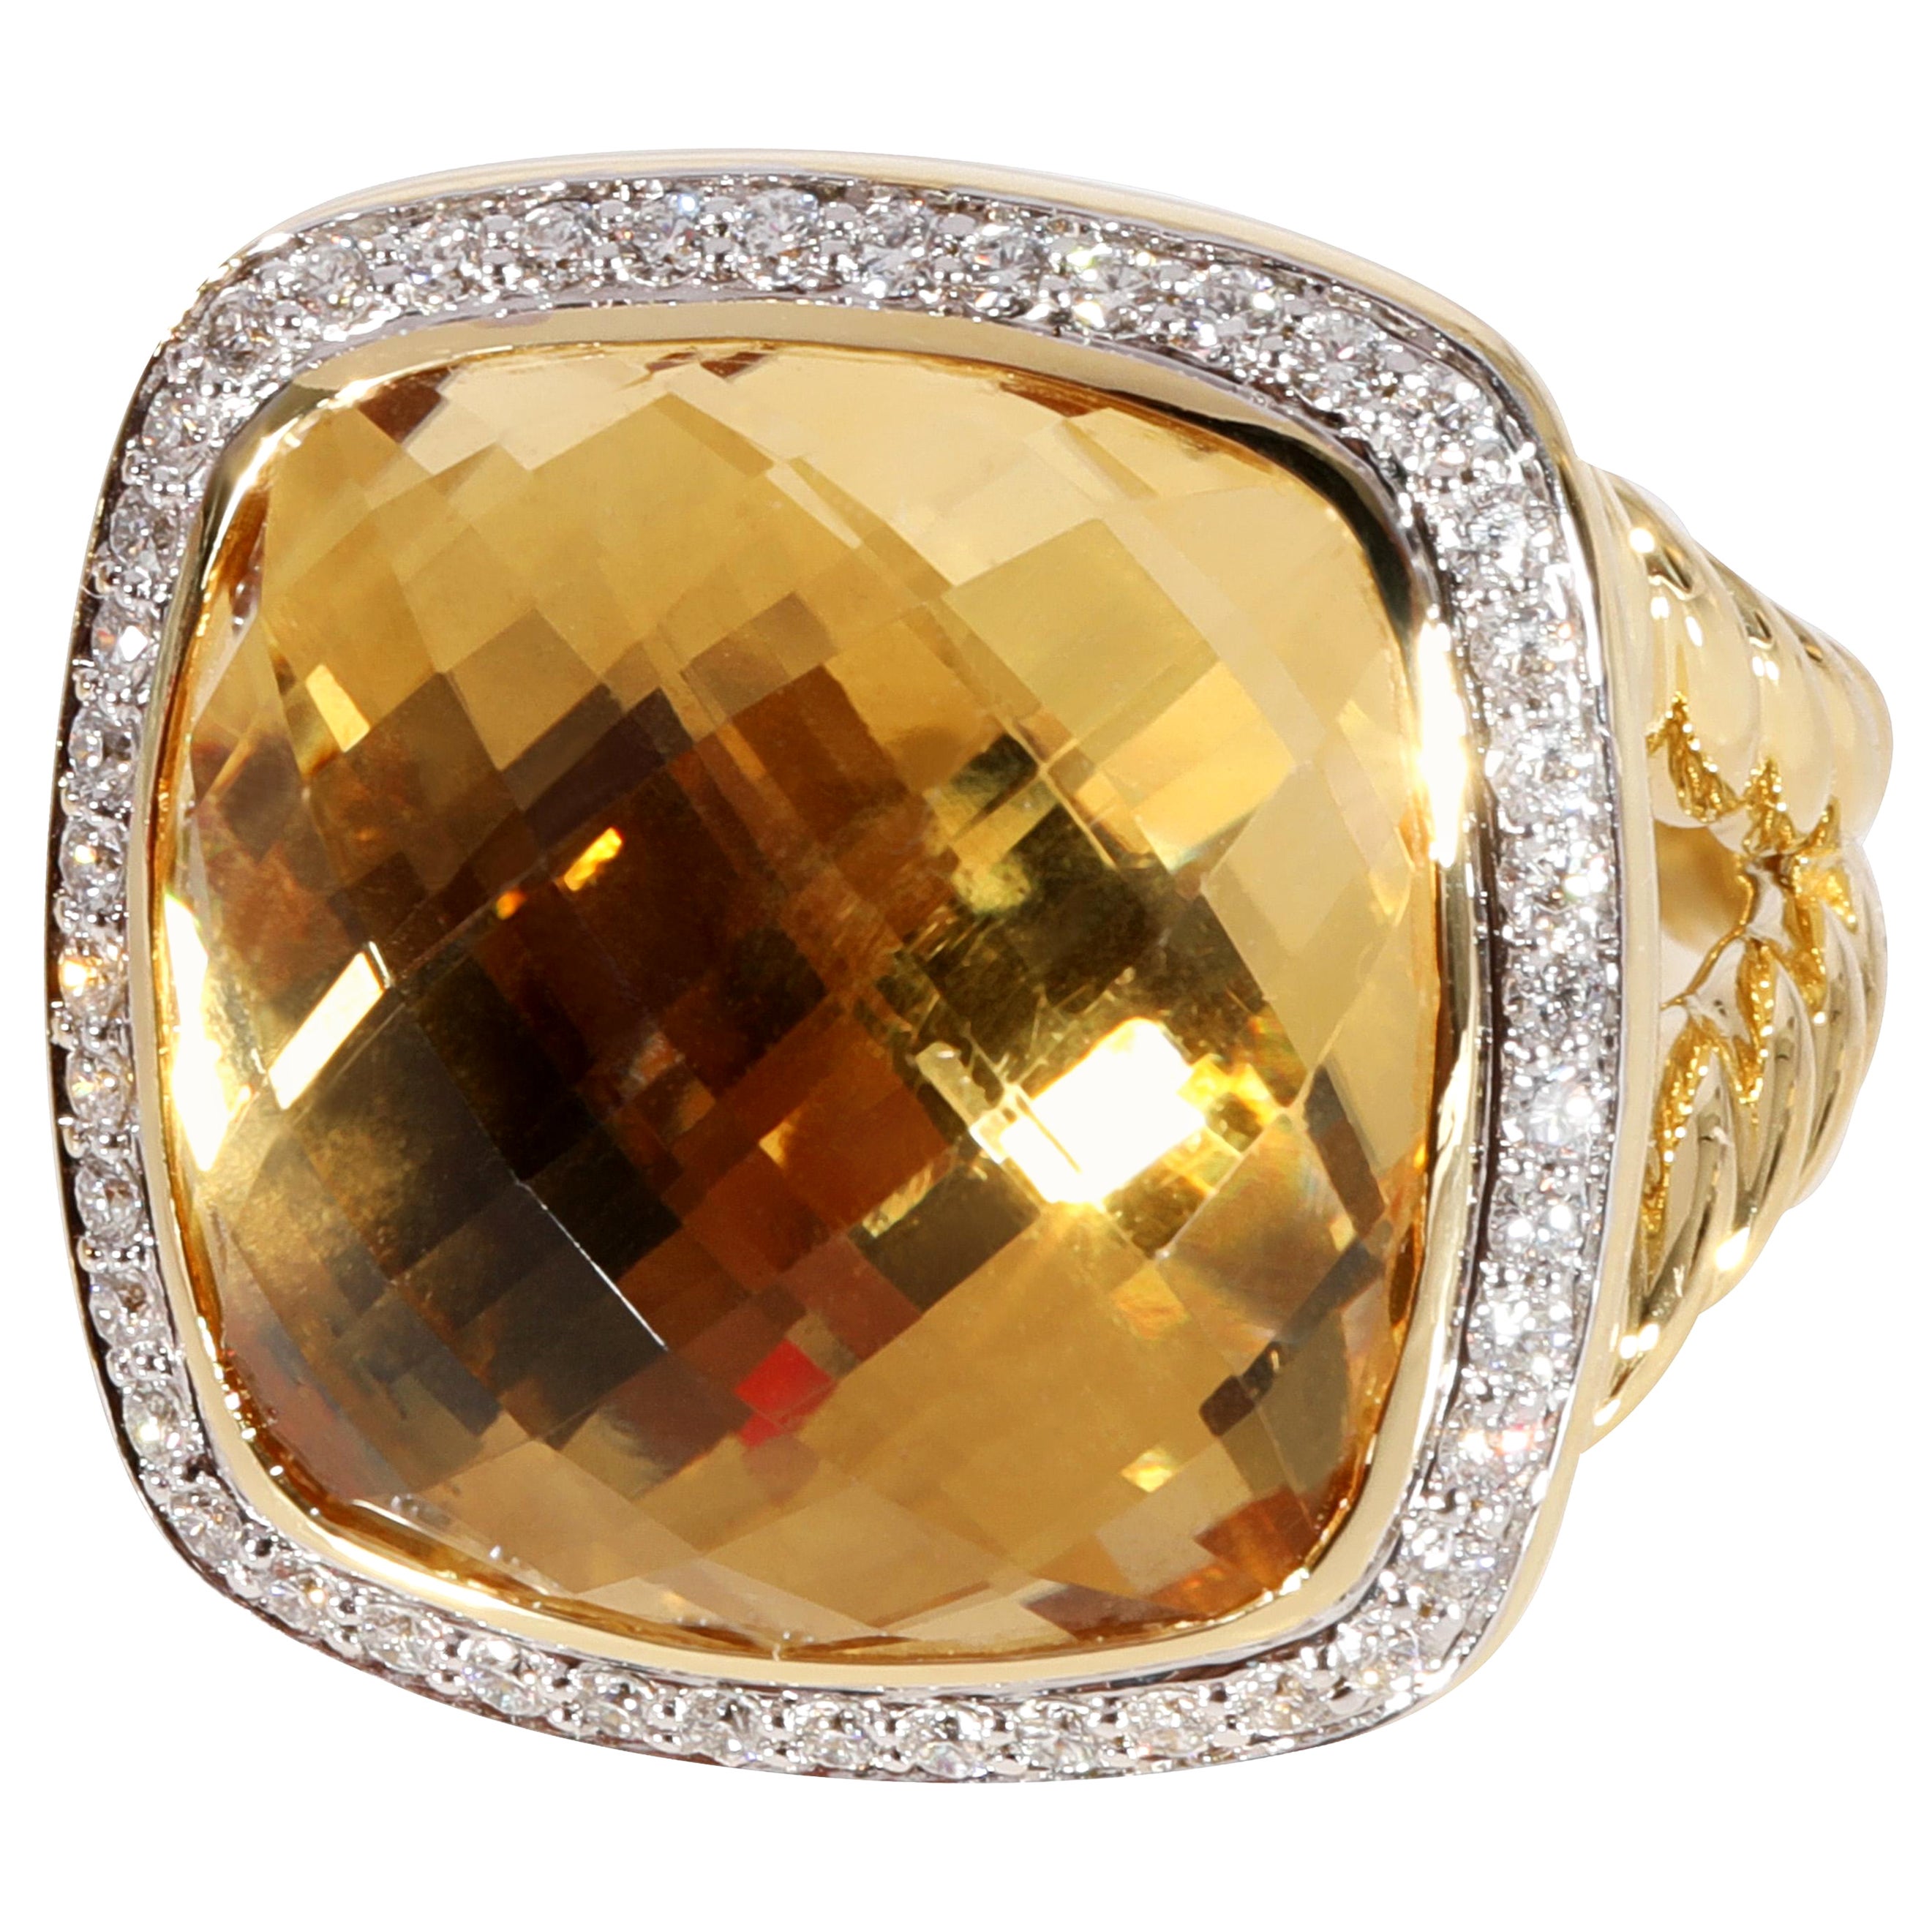 David Yurman Albion Citrine Diamond Ring in 18k Yellow Gold 0.31 CTW